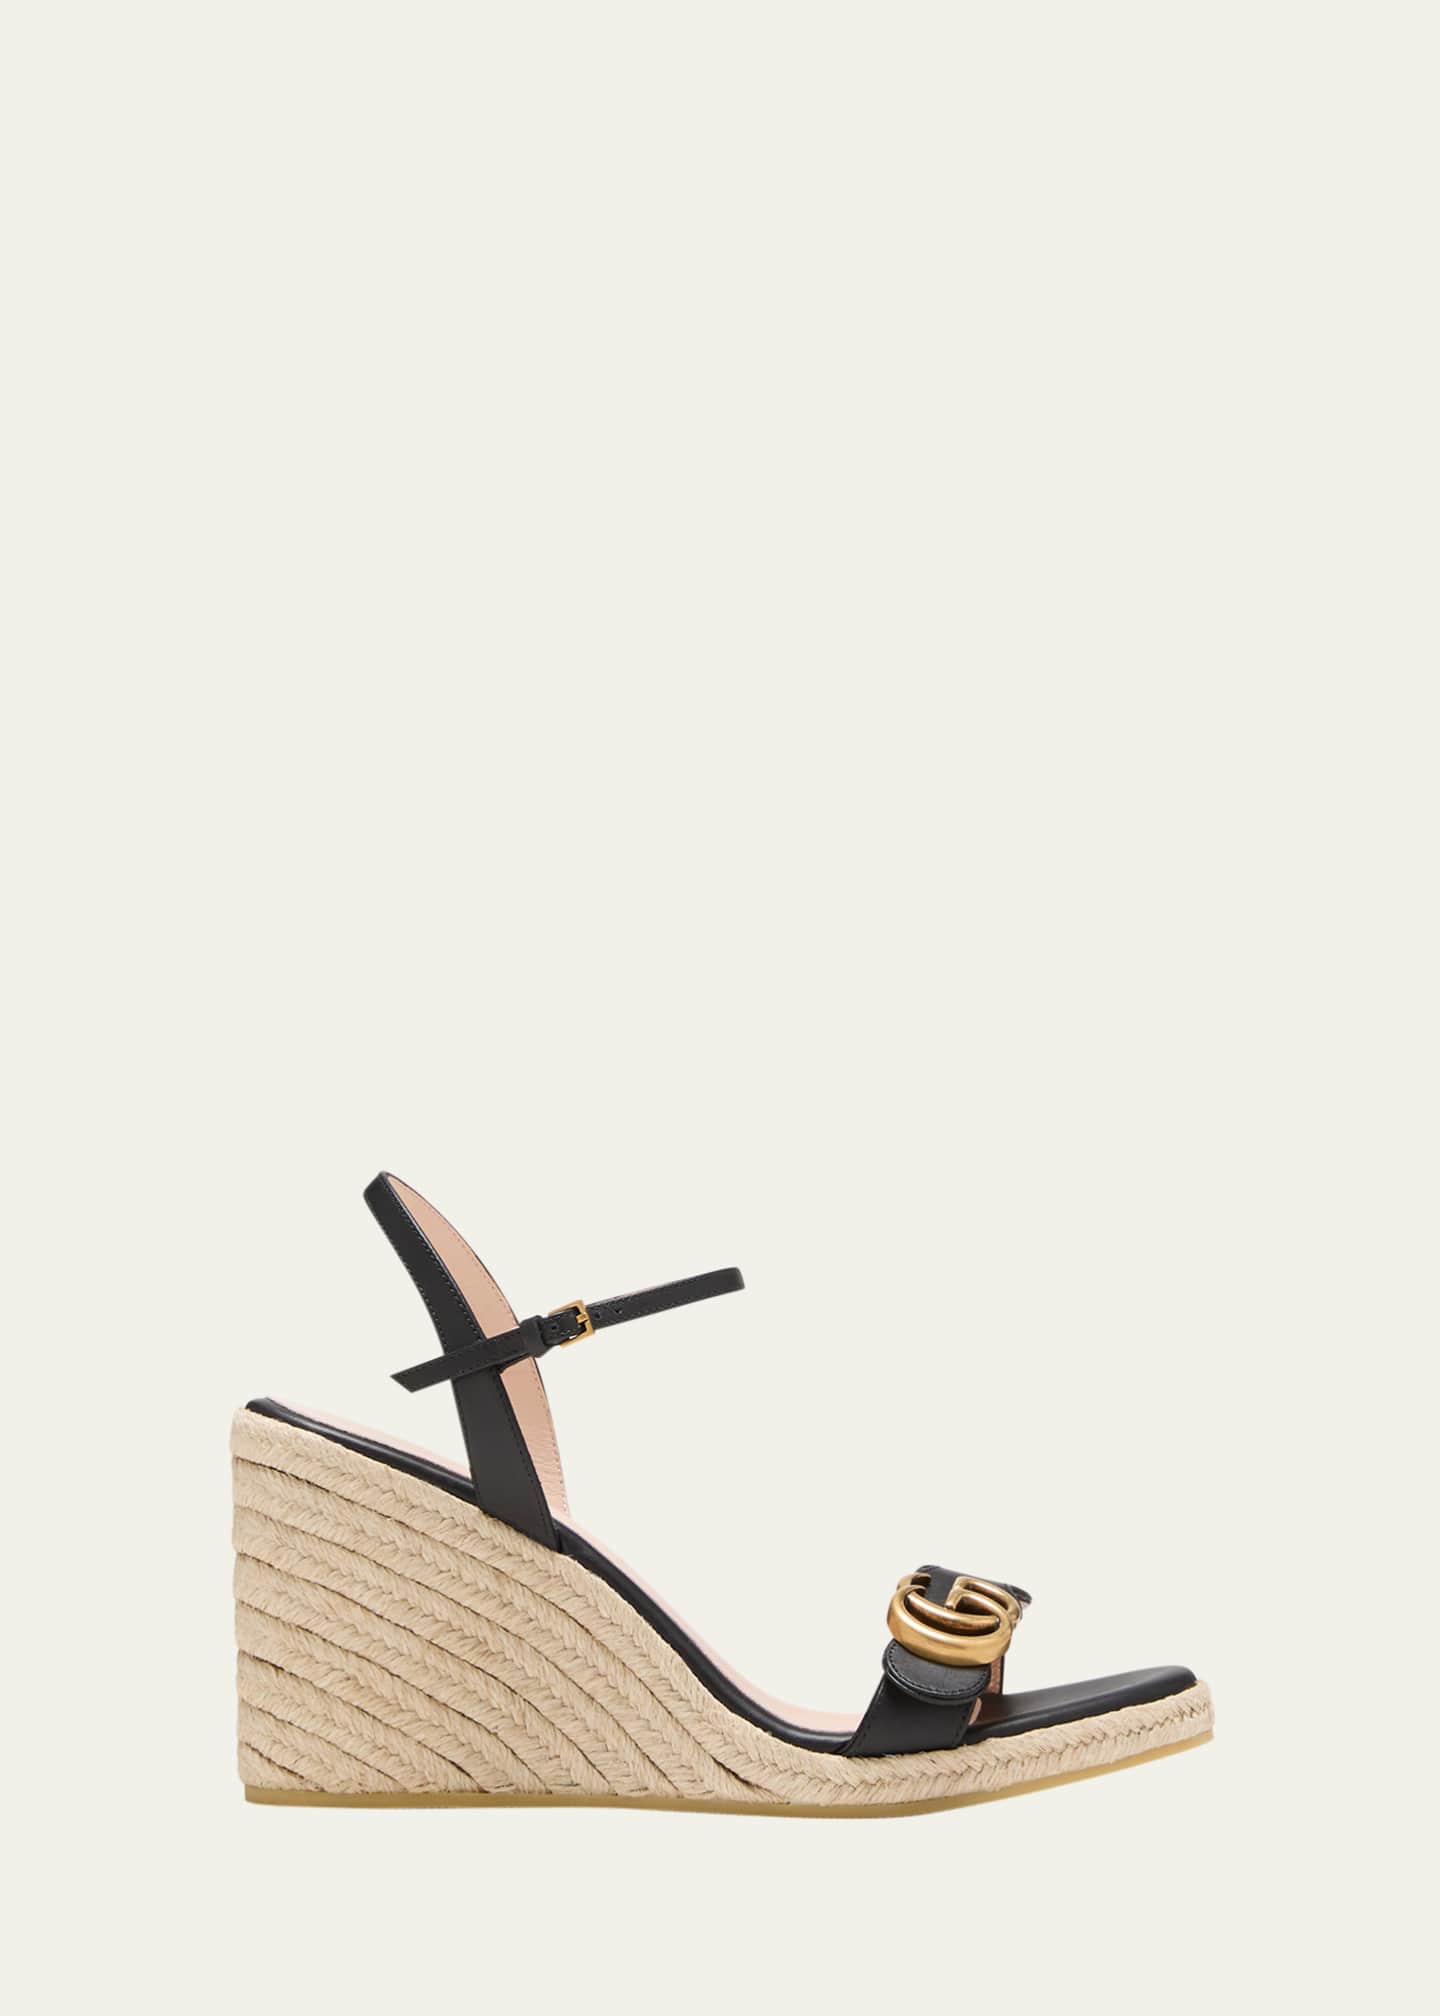 Gucci Aitana Espadrille Wedge Sandal (Women)